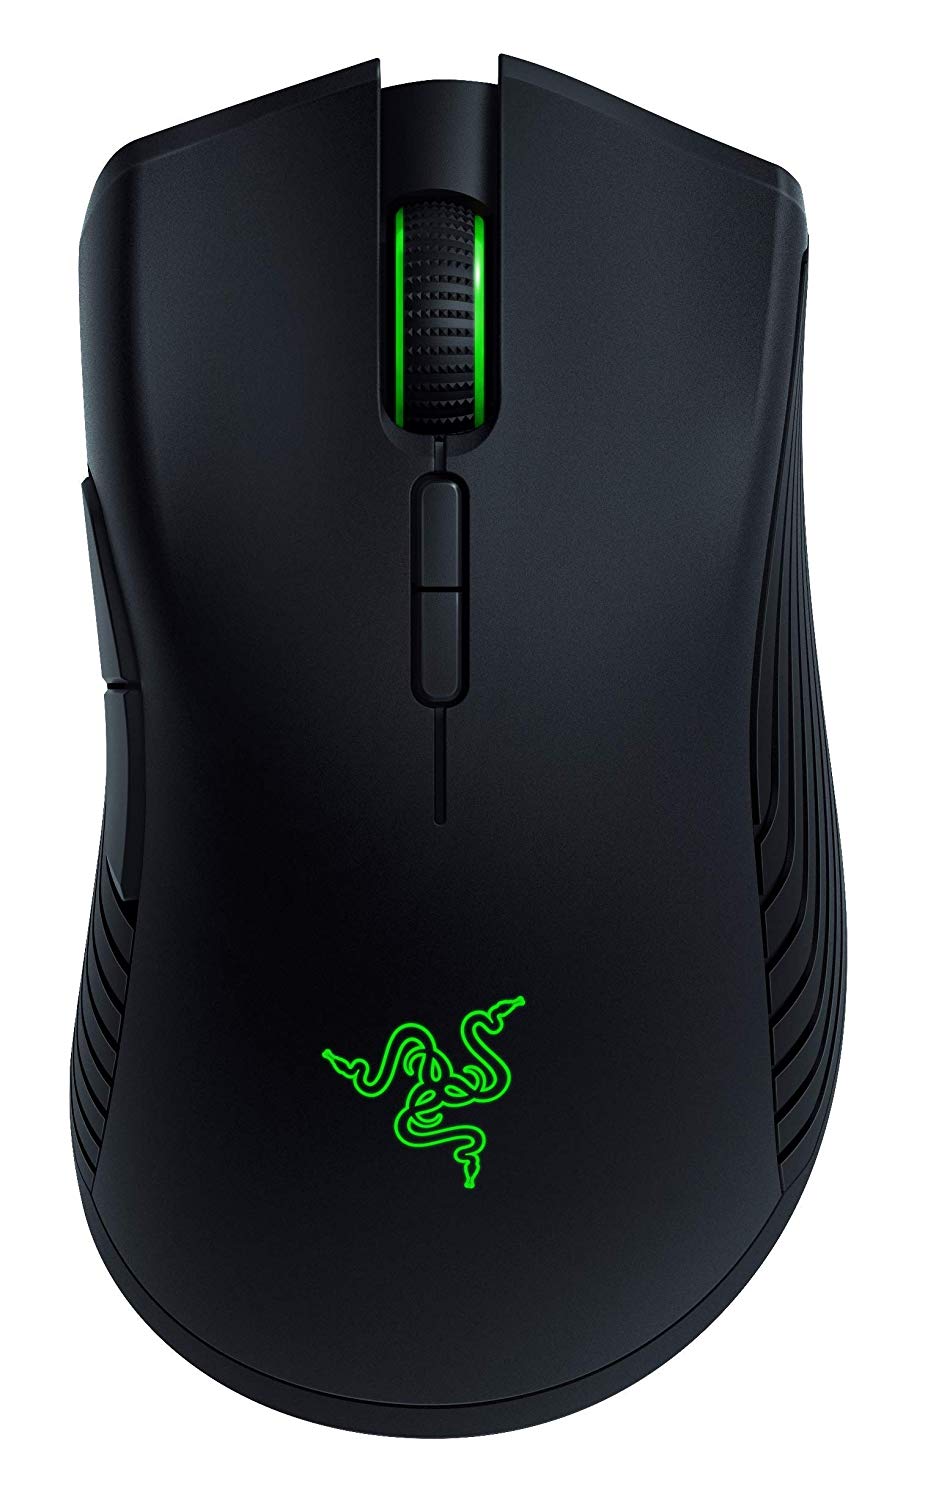 Razer Mamba Wireless Gaming Mouse: Chroma RGB Lighting. - image 1 of 6